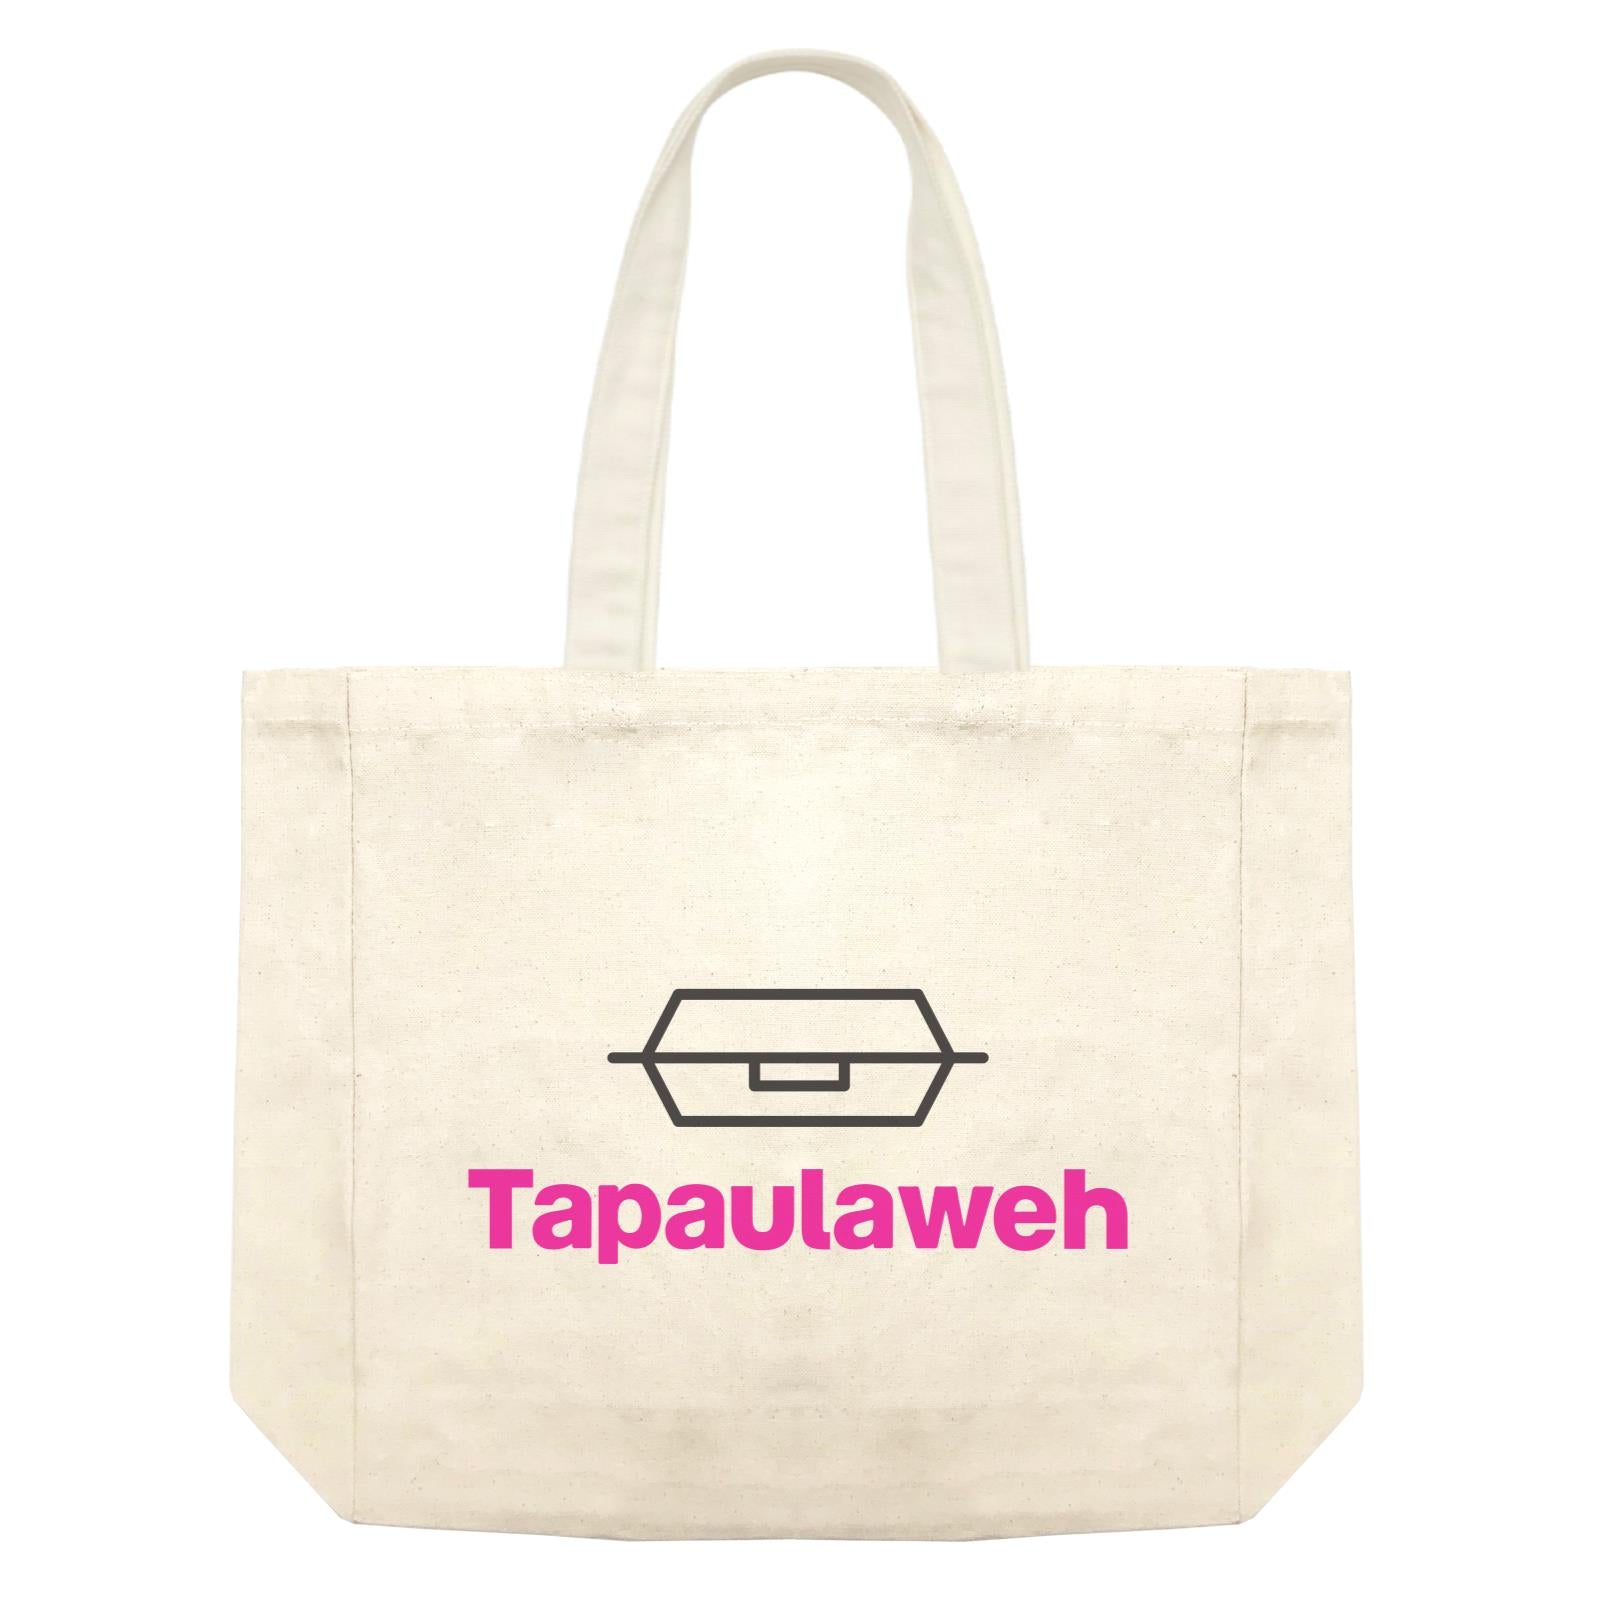 Slang Statement Tapaulaweh Accessories Shopping Bag